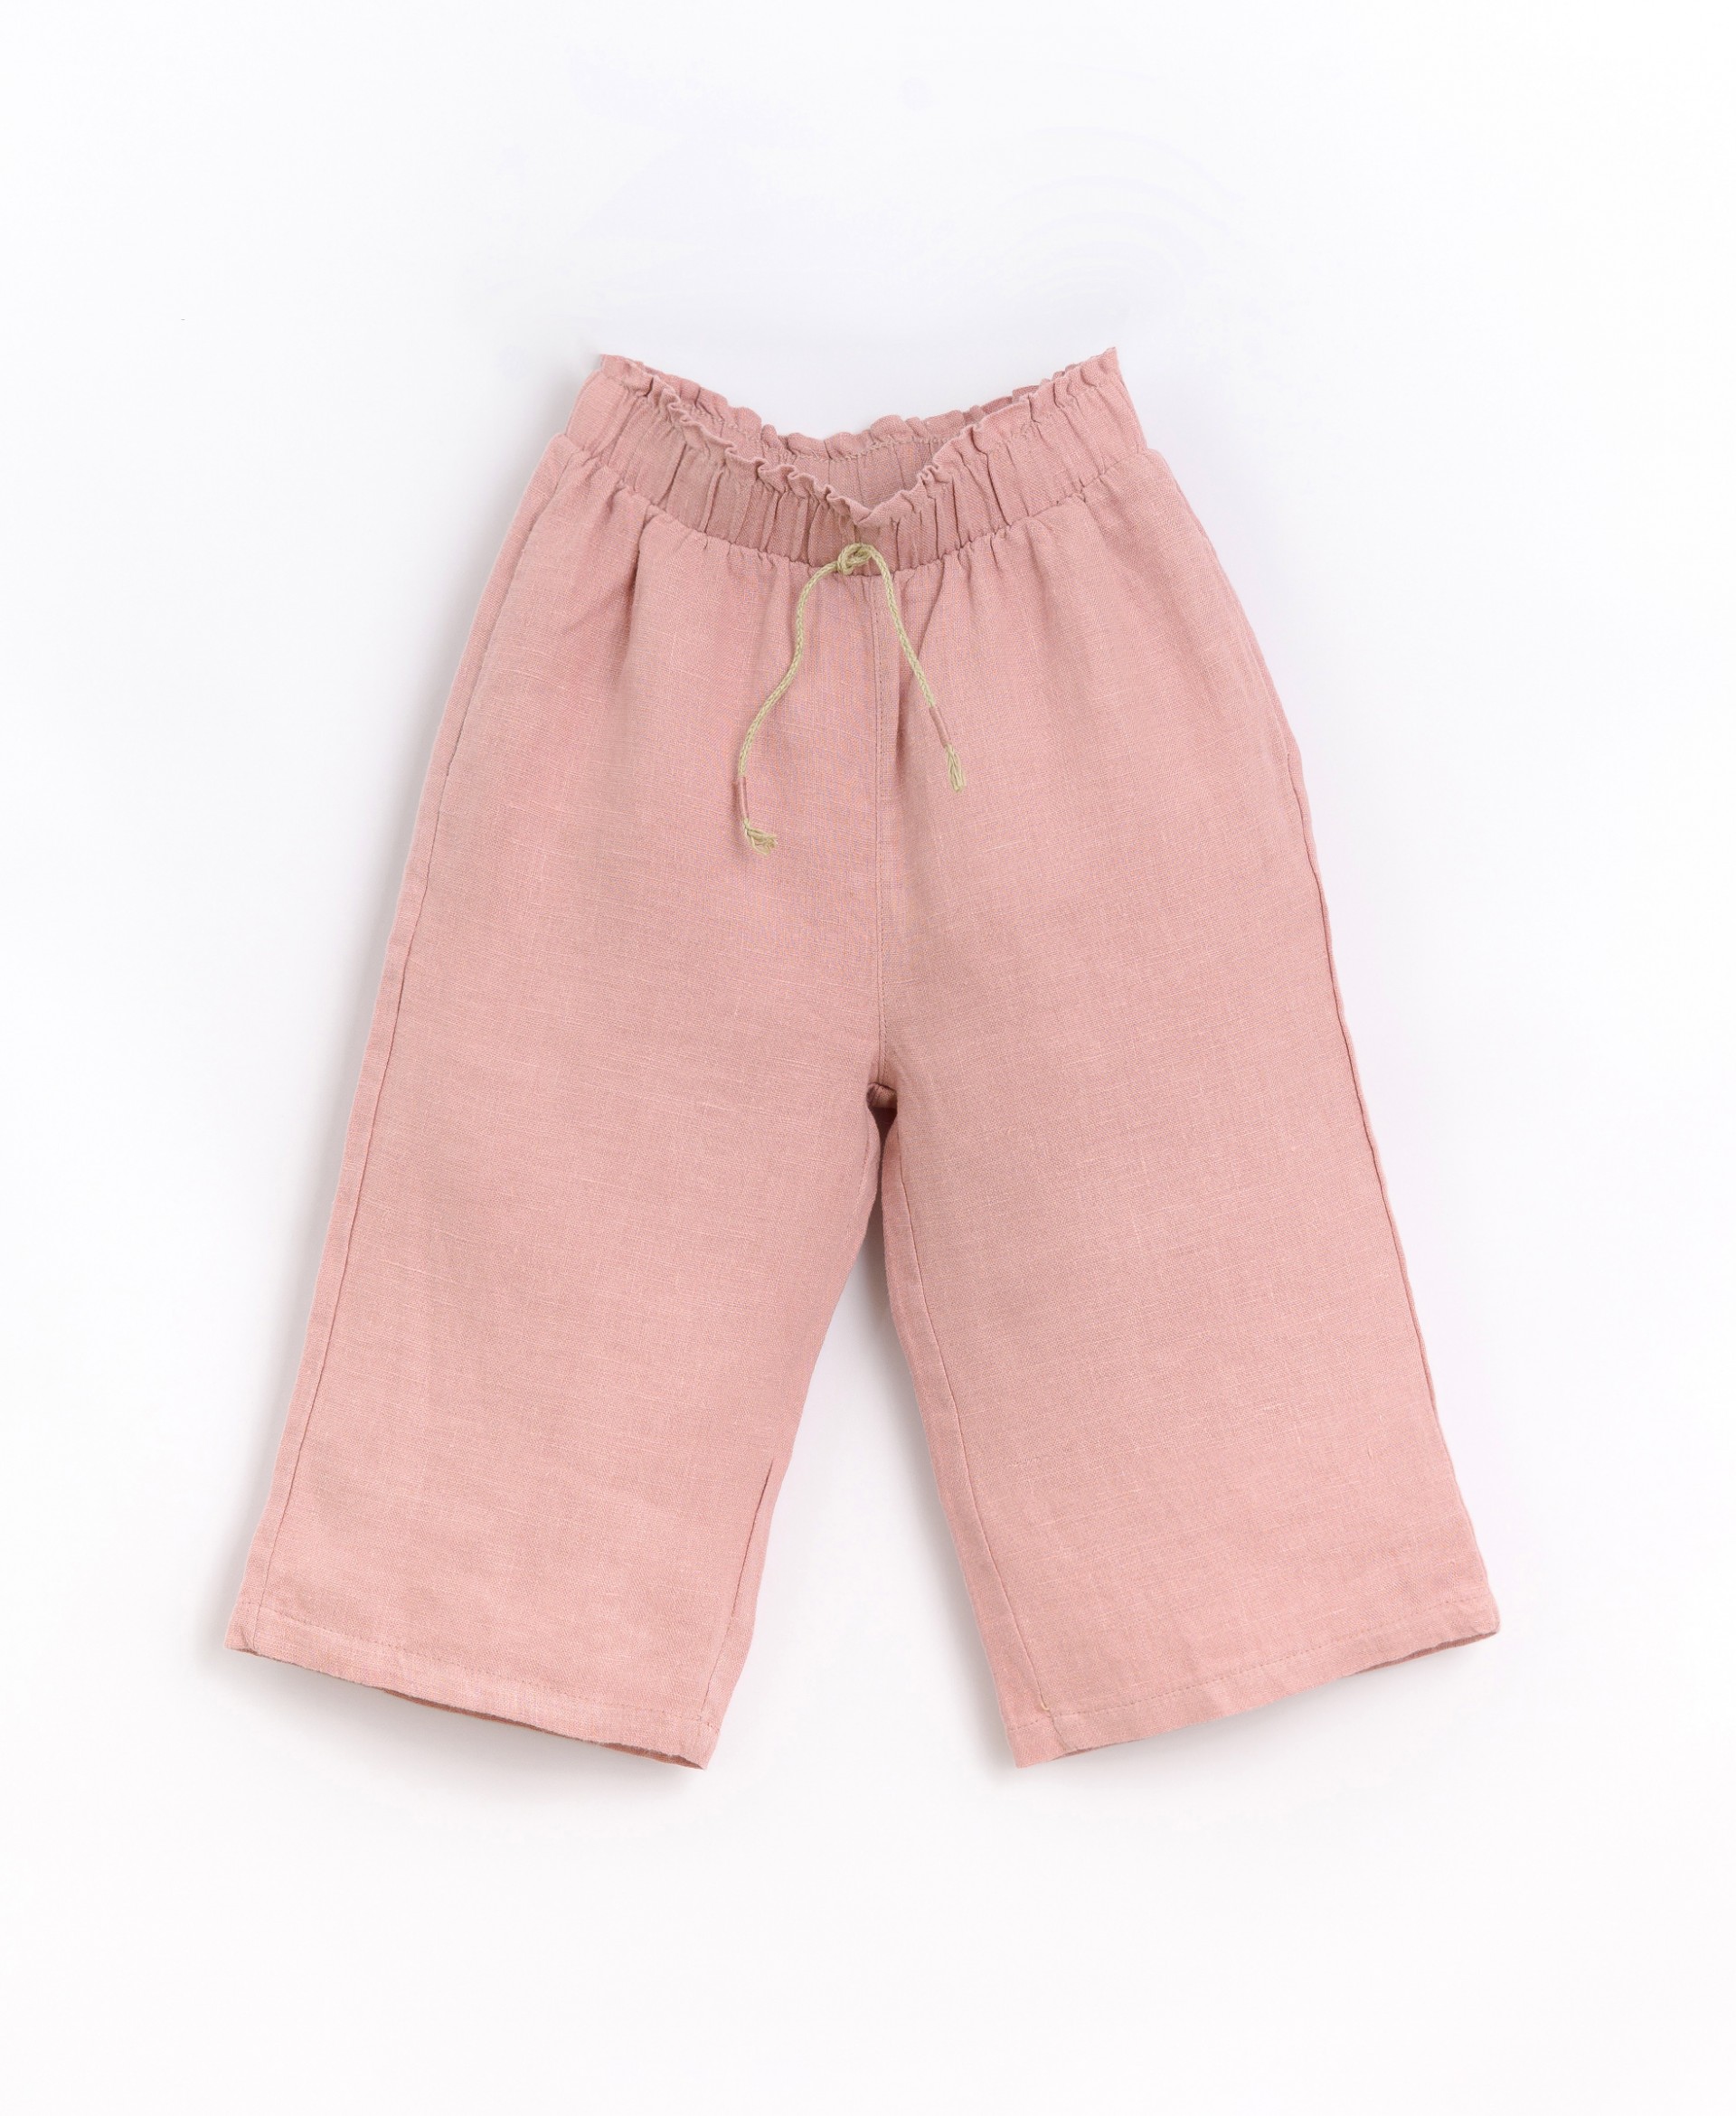 Pantalon en lin avec cordon de serrage décoratif | Basketry